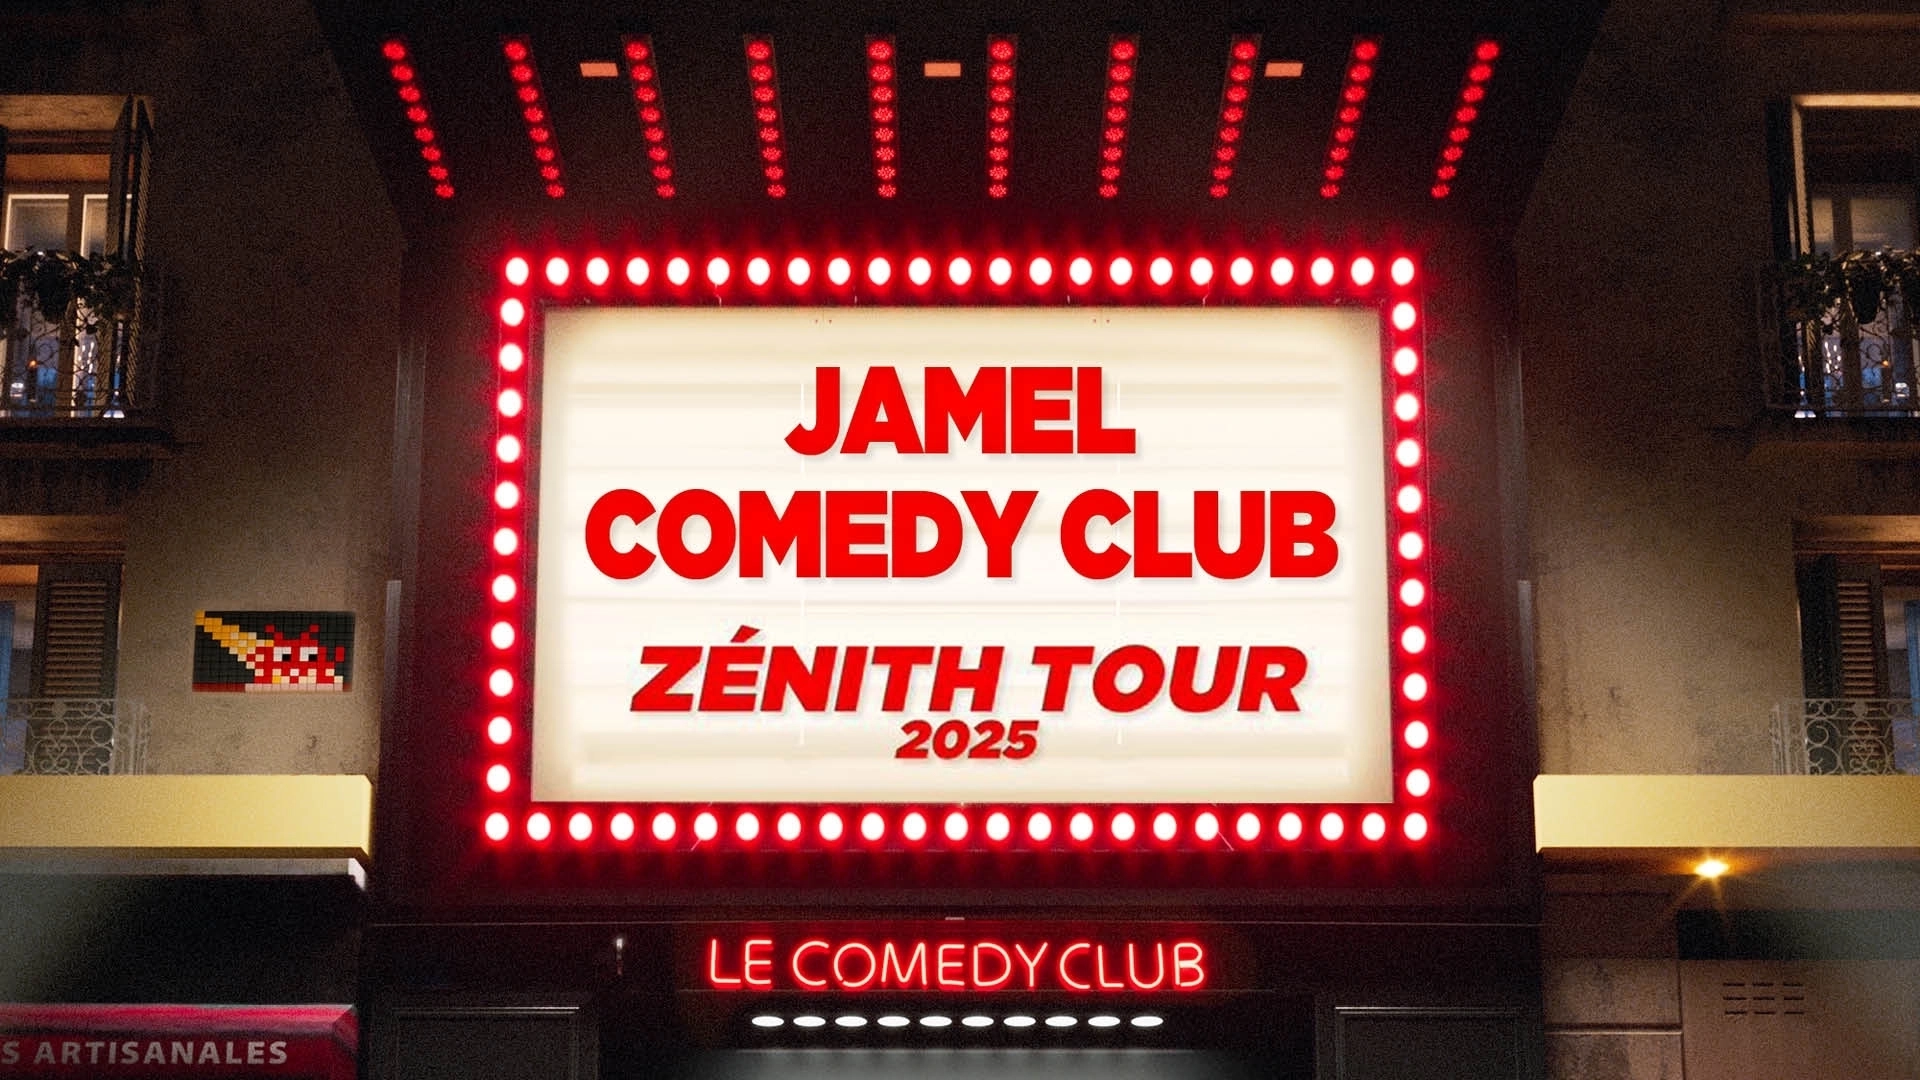 Jamel Comedy Club Zenith Tour 2025 en Halle Tony Garnier Tickets